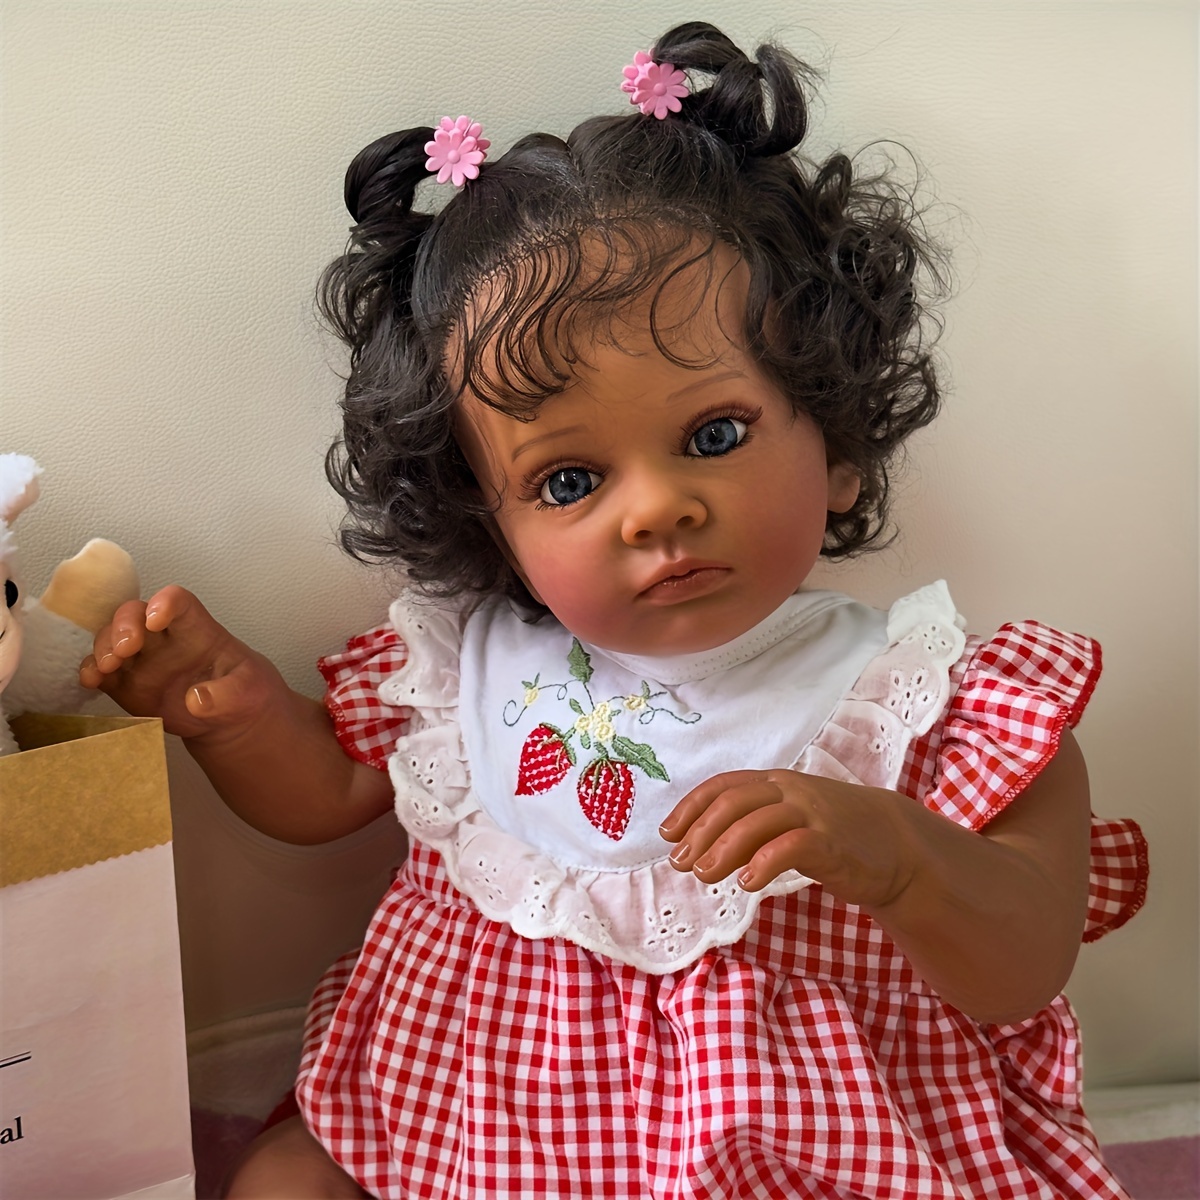 iCradle 60cm Soft Silicone Reborn Baby Doll Toy for, boneca bebe